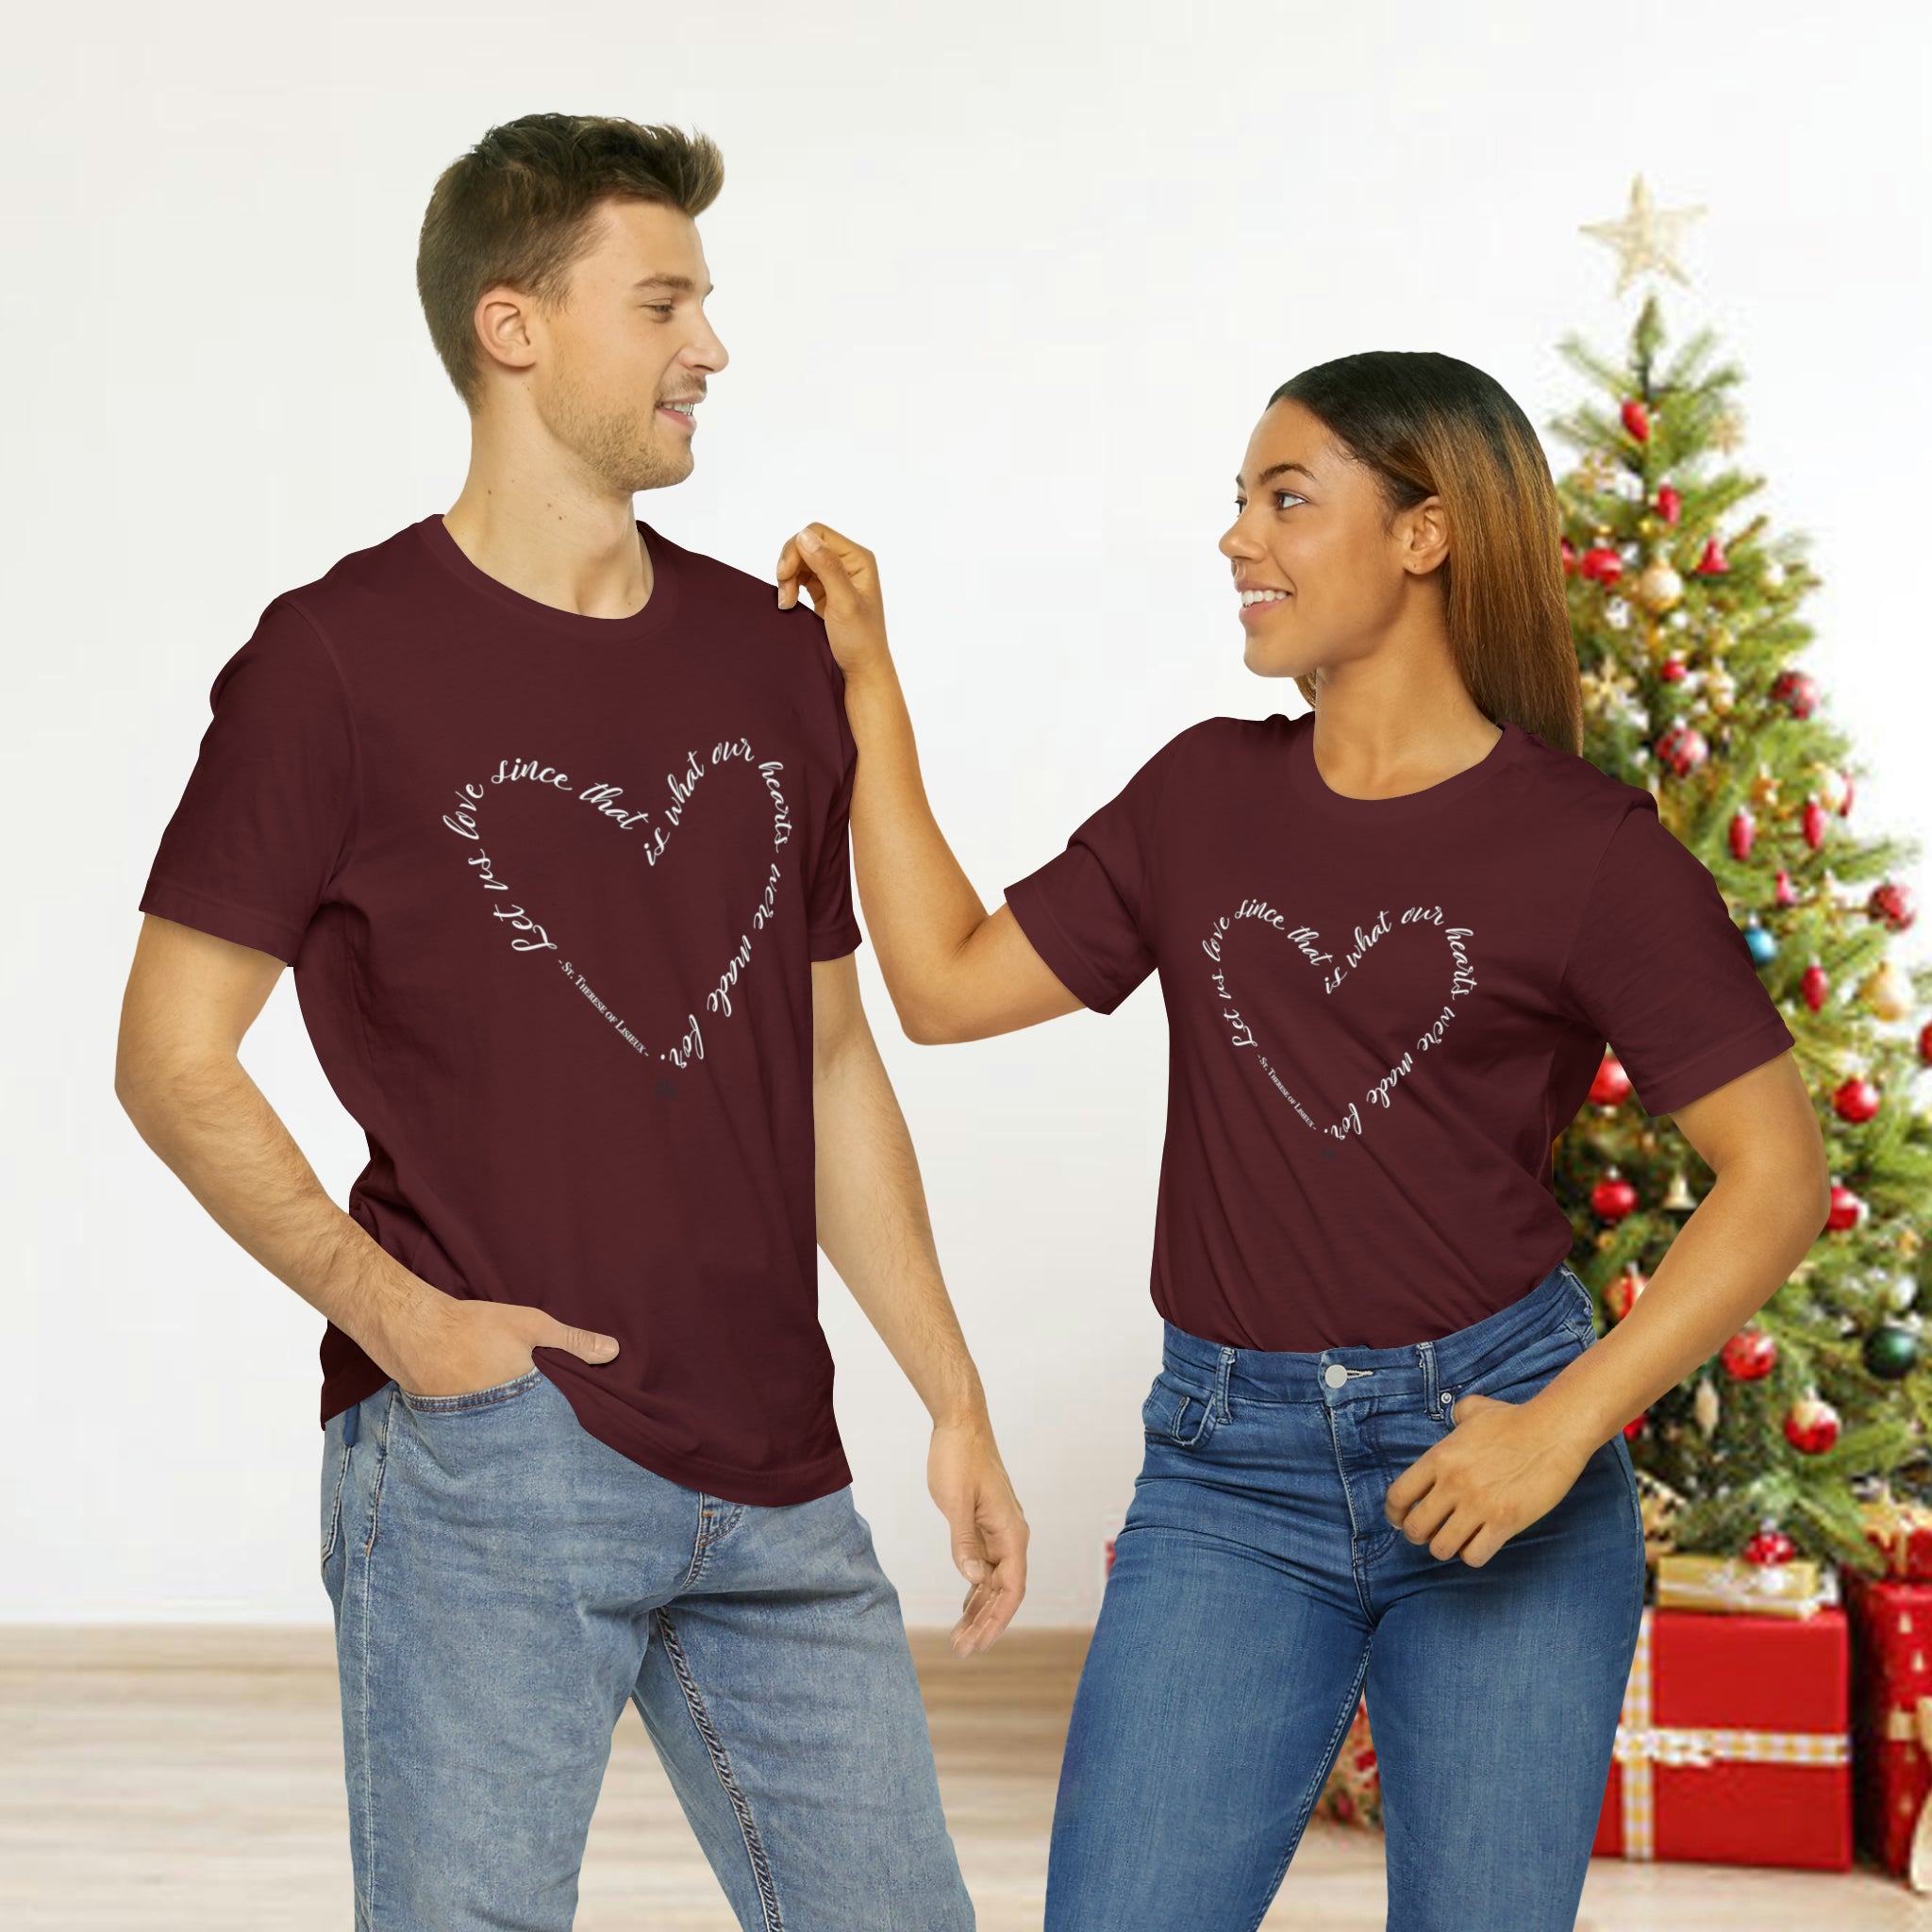 "Let us Love" Adult Unisex Tshirt - Adoption Benefit Design